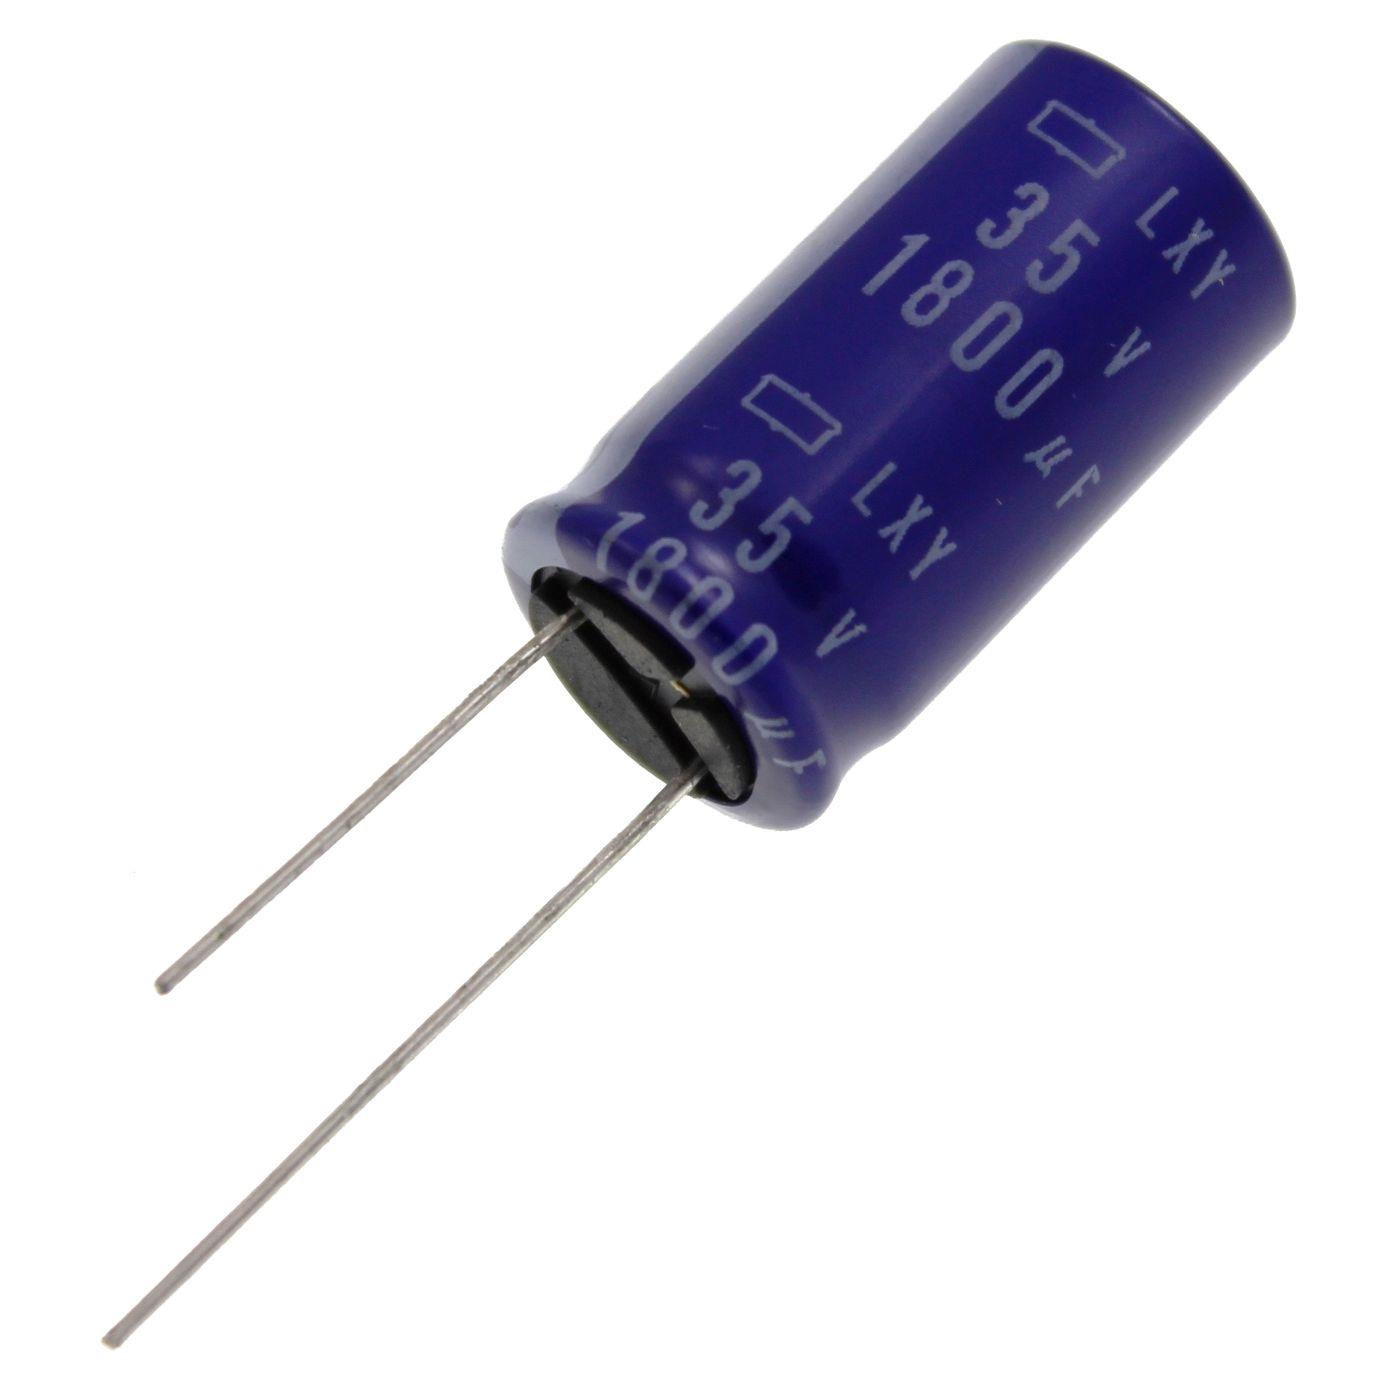 Elko Kondensator Radial 1800µF 35V 105°C LXY35VB182M16X30LL d16x30mm 1800uF